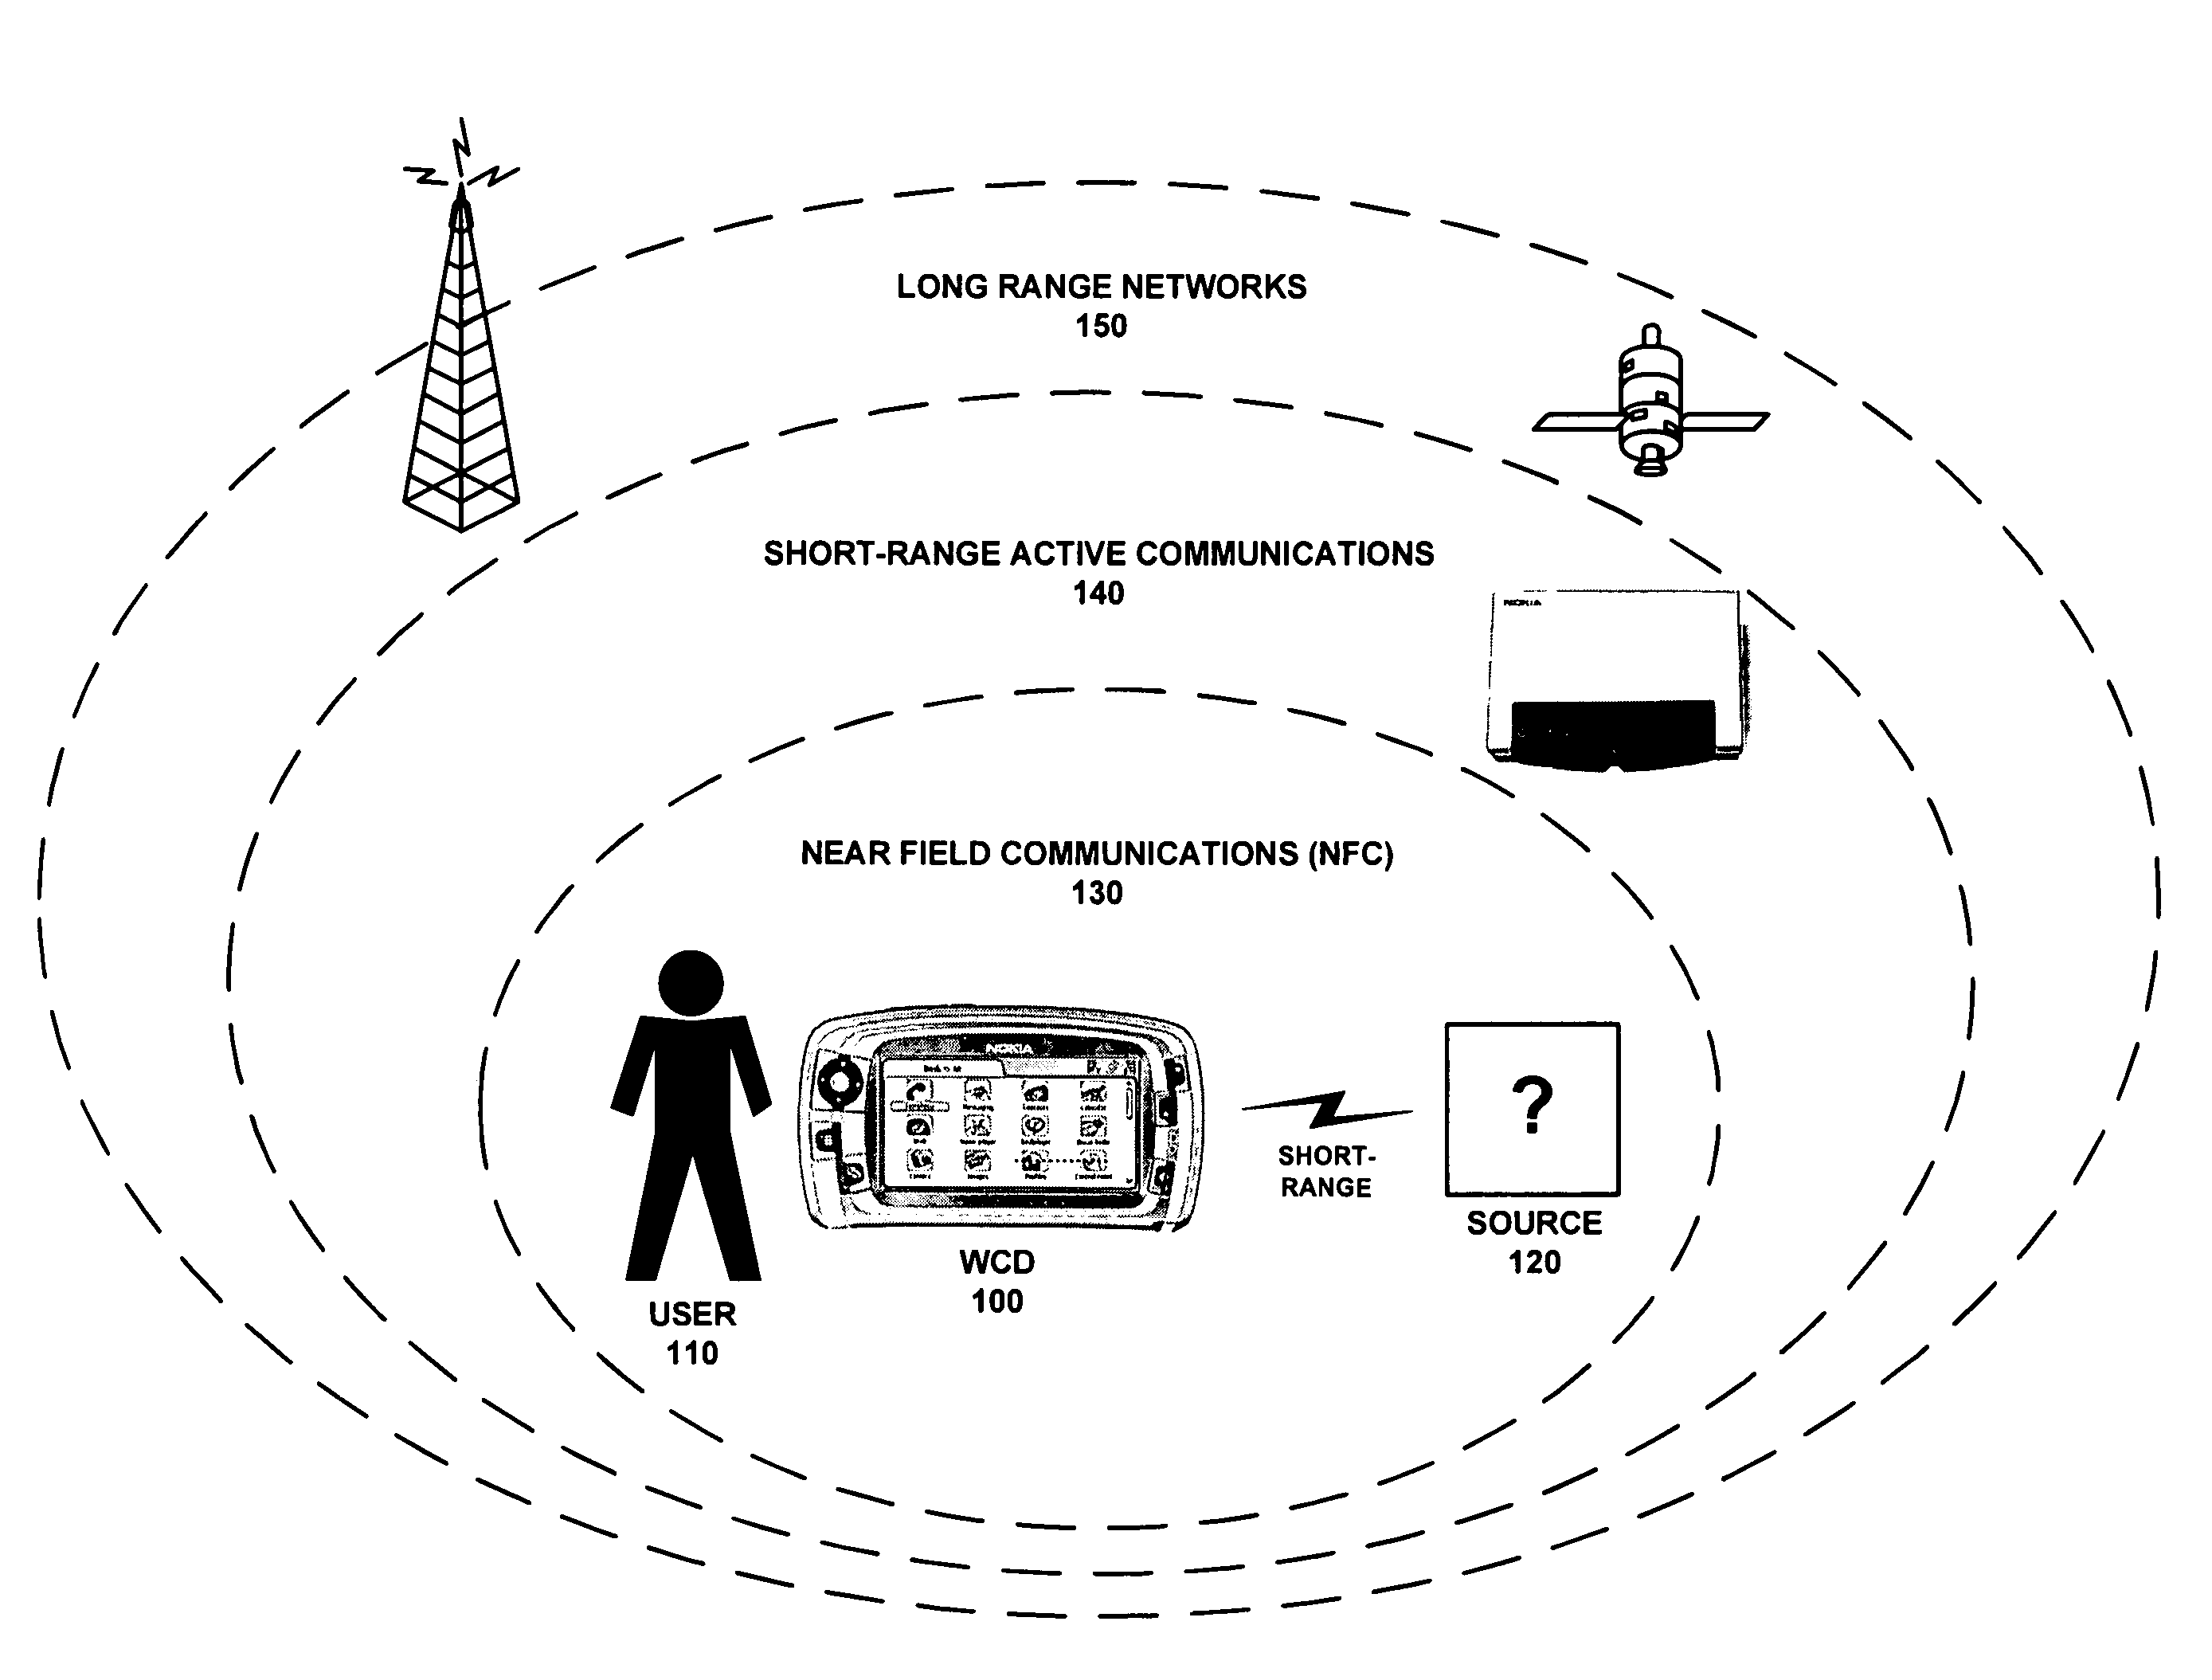 Radio transmission scheduling according to multiradio control in a radio modem